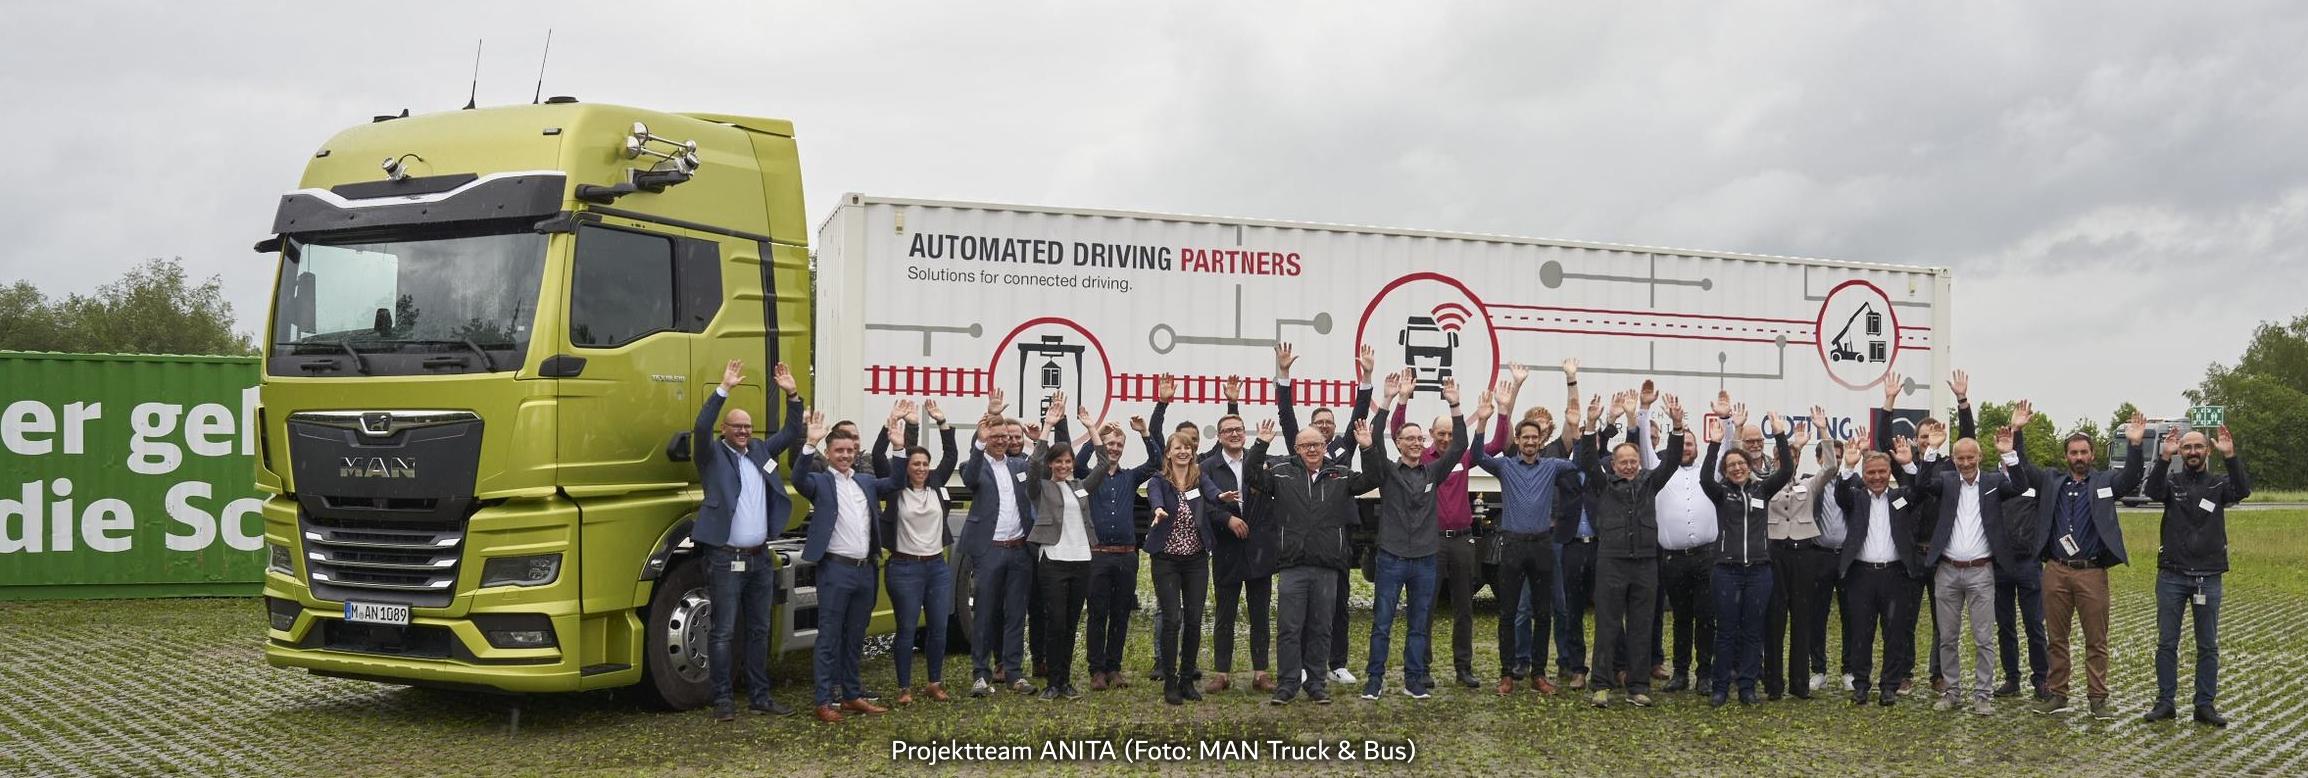 Projektteam ANITA (Foto: MAN Truck & Bus)